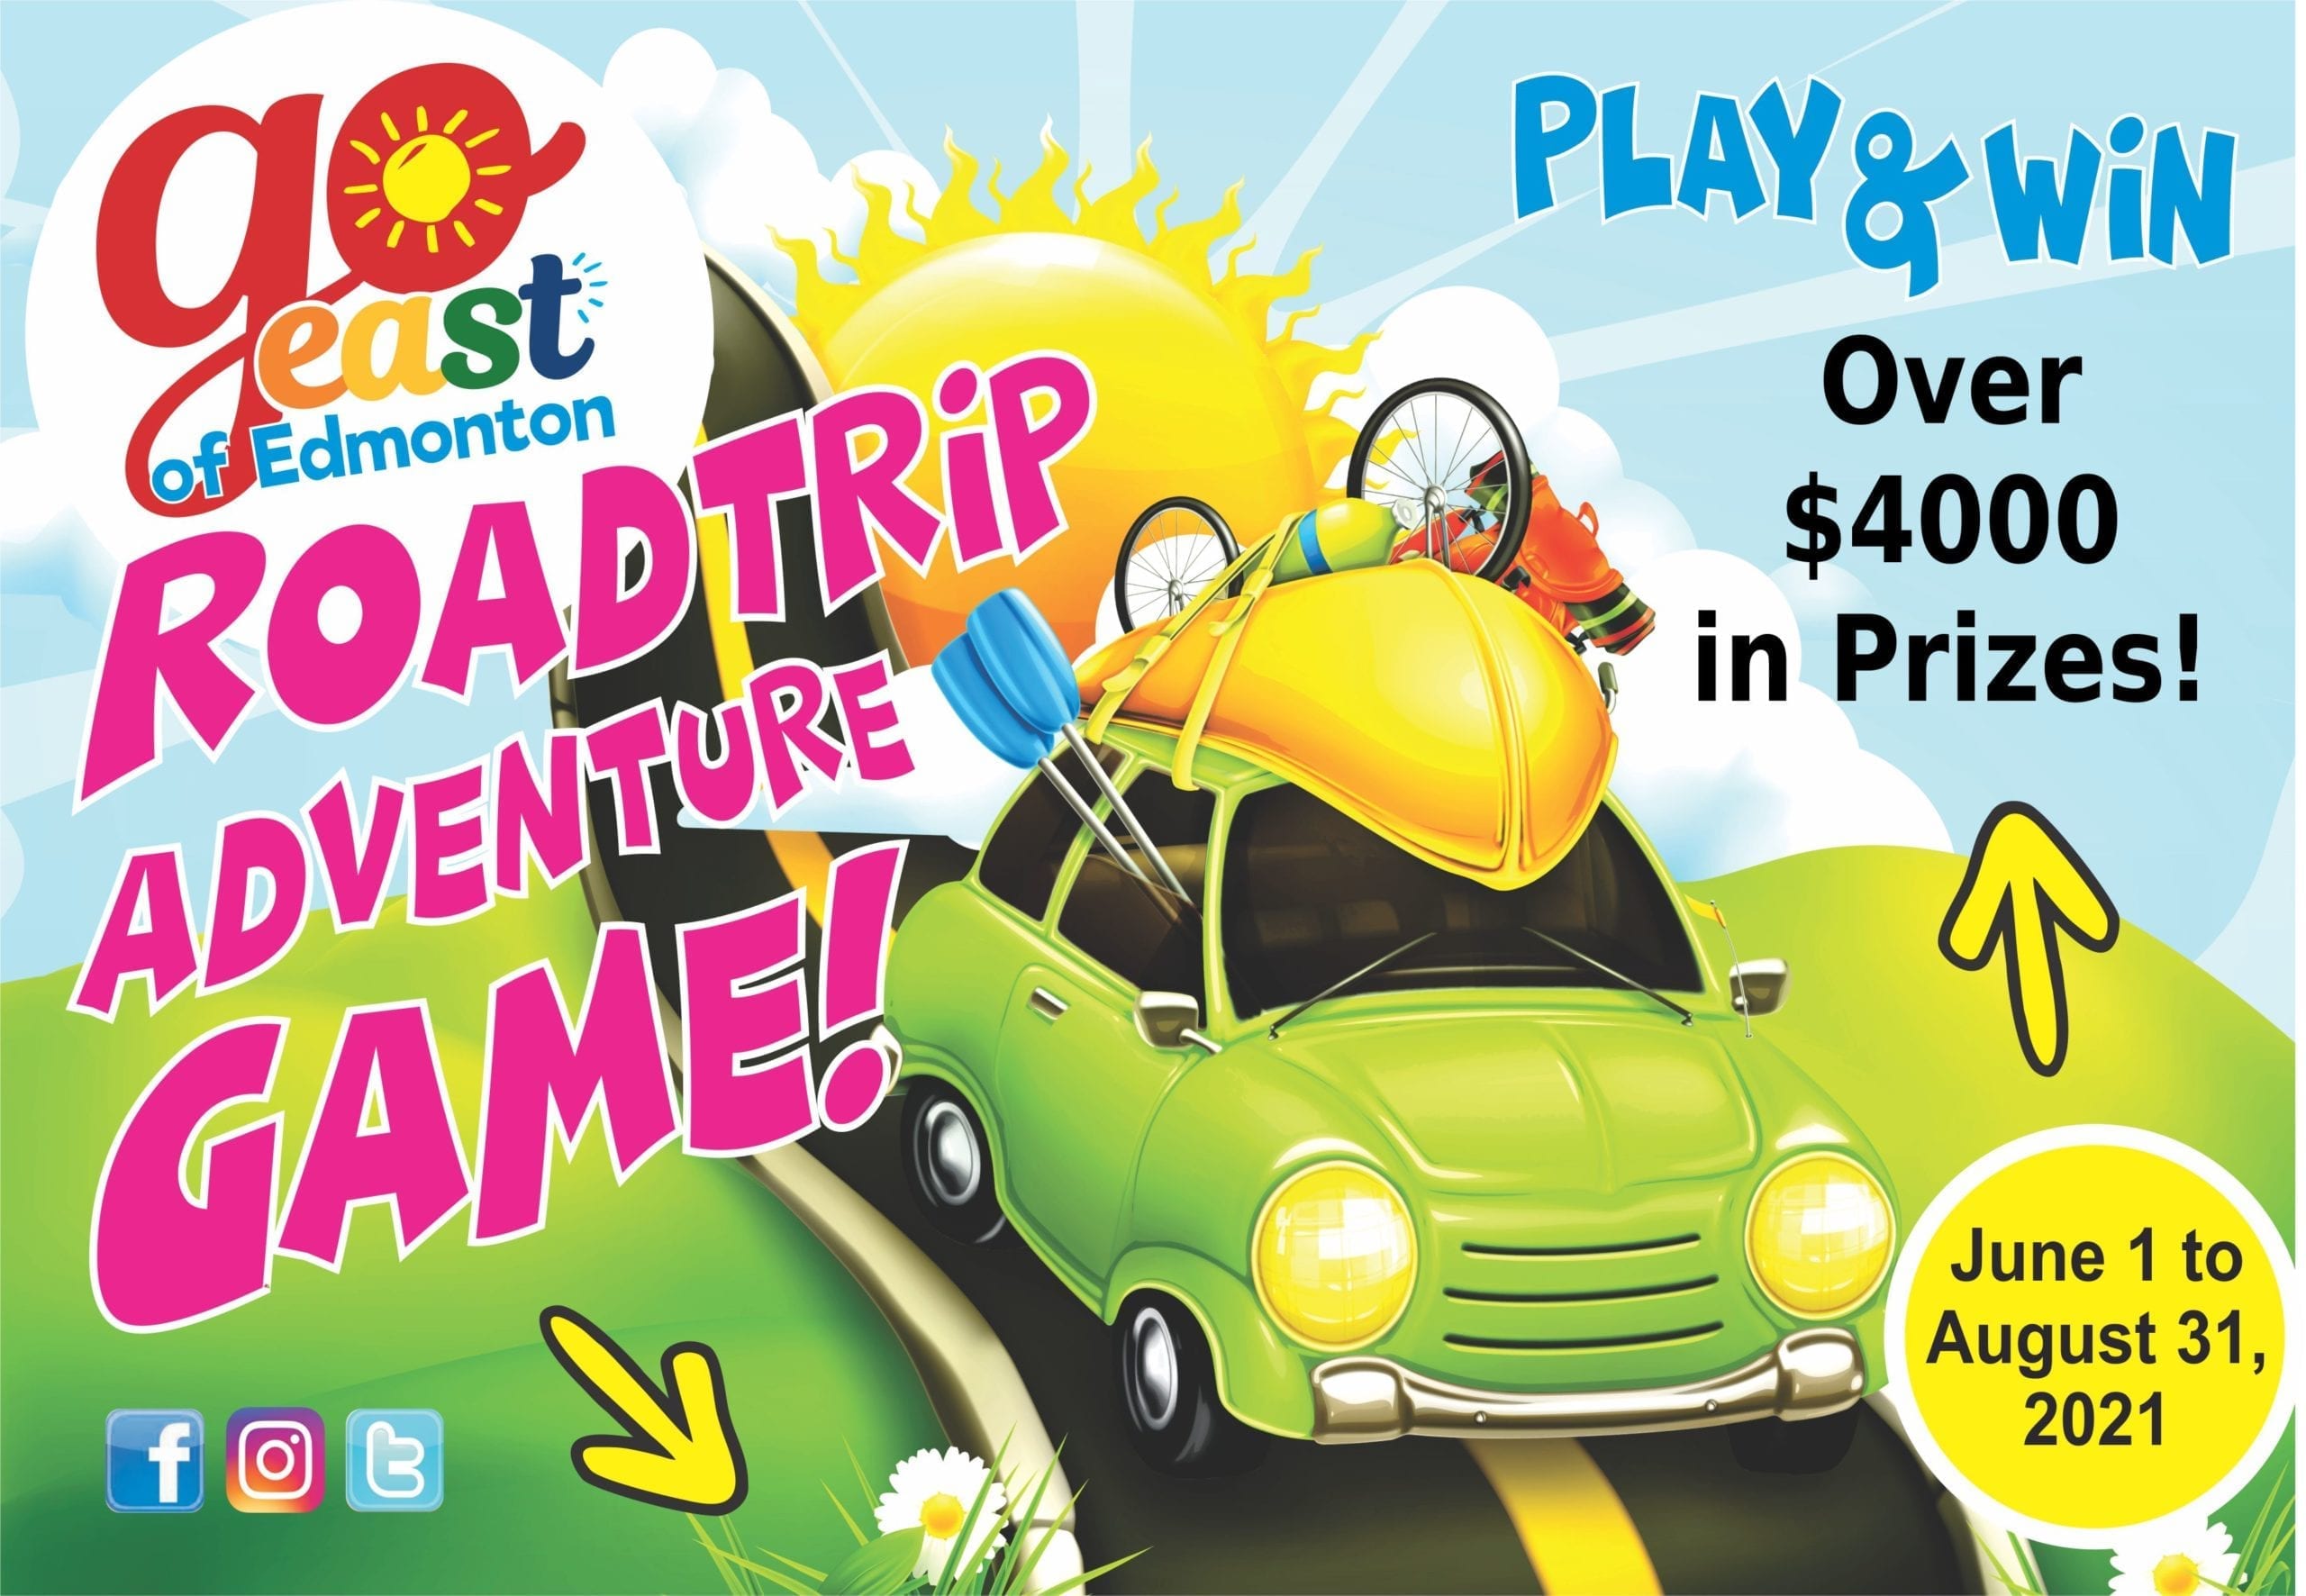 06-01-2021 Go East Road Trip Adventure Game